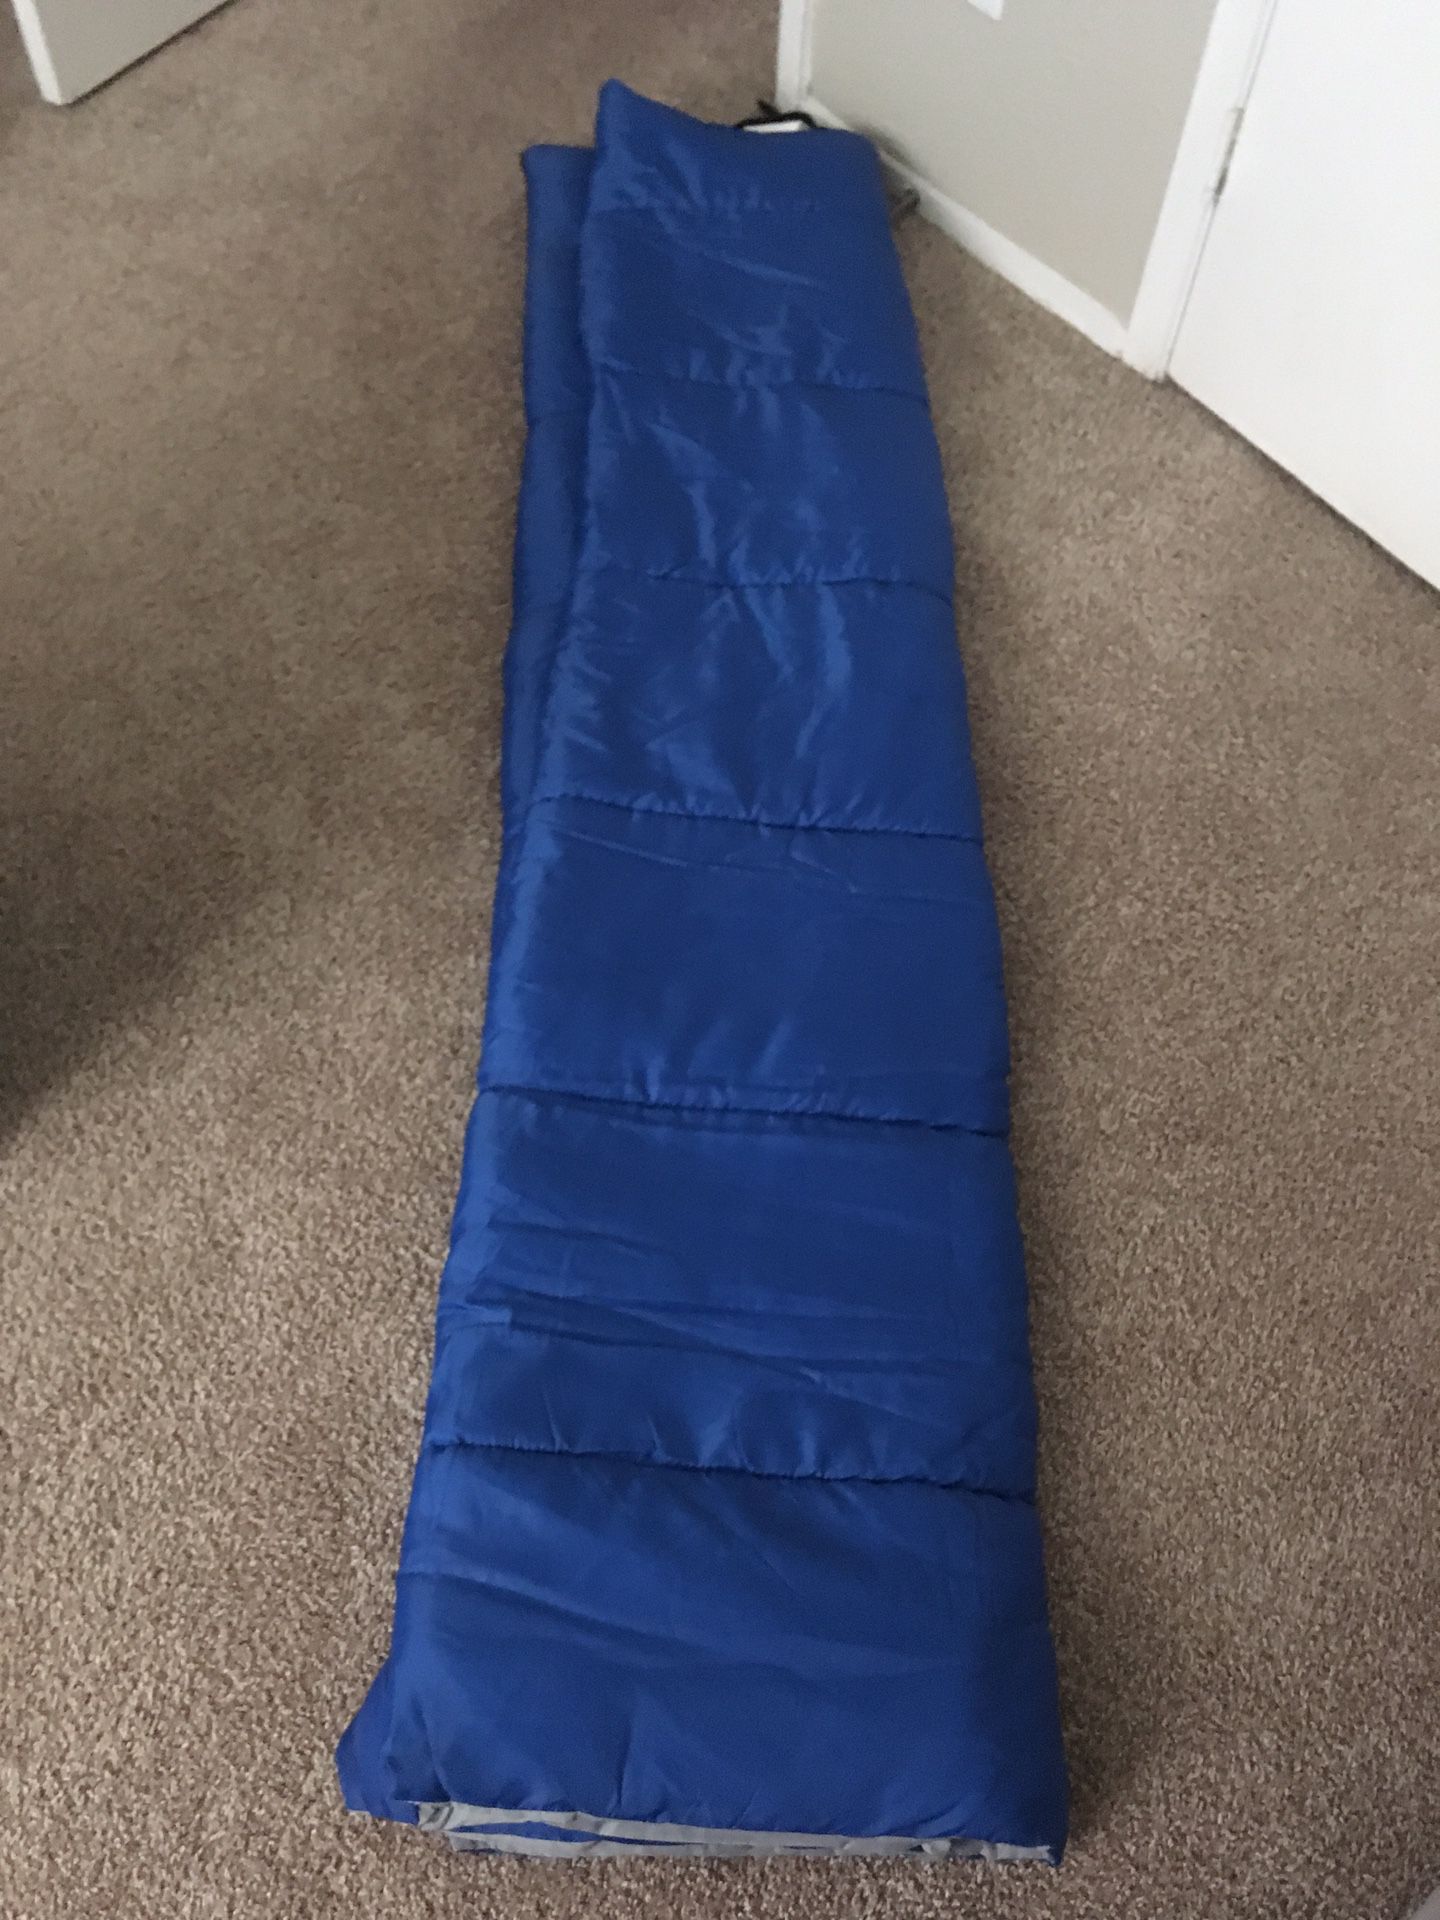 50F sleeping bag,like new